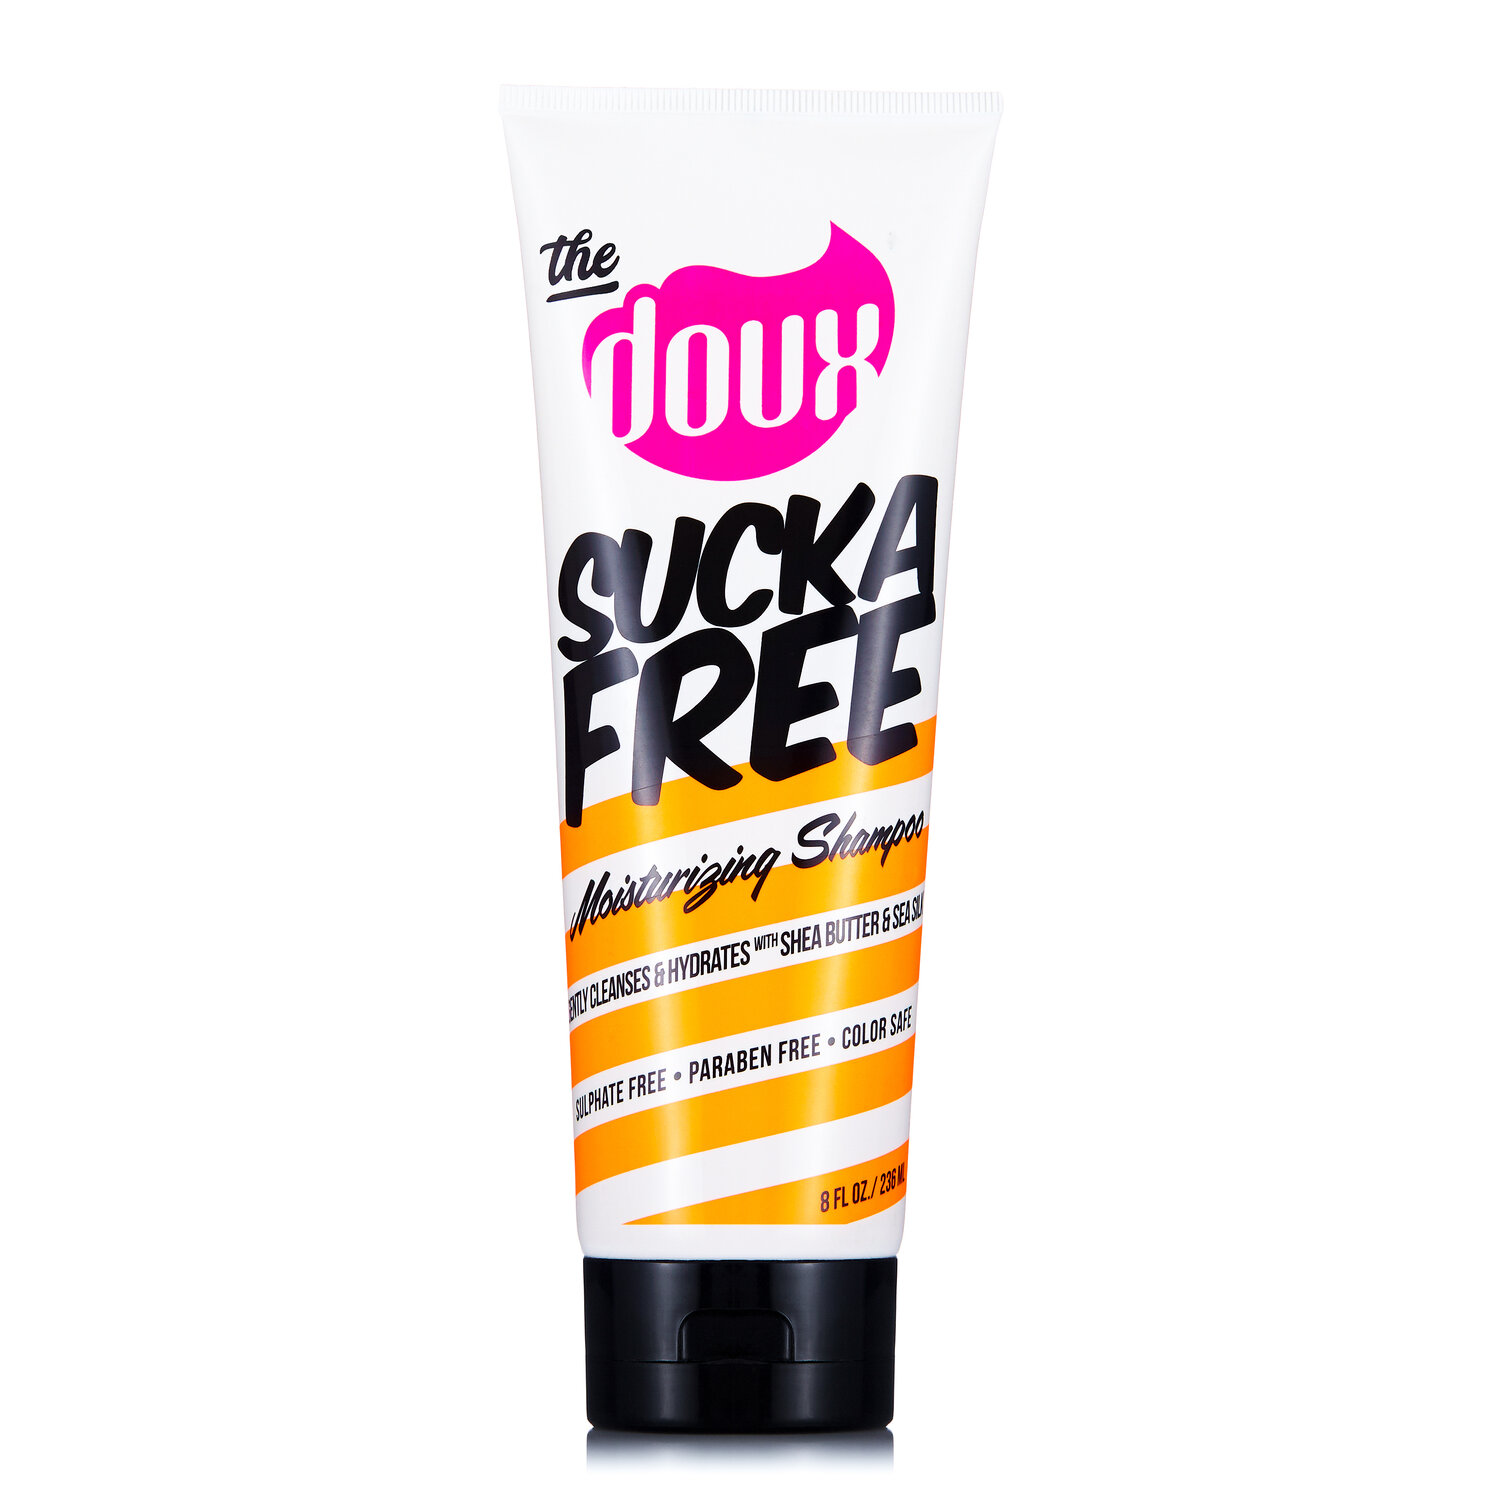 The Doux Sucka Free Shampoo bottle on a white background